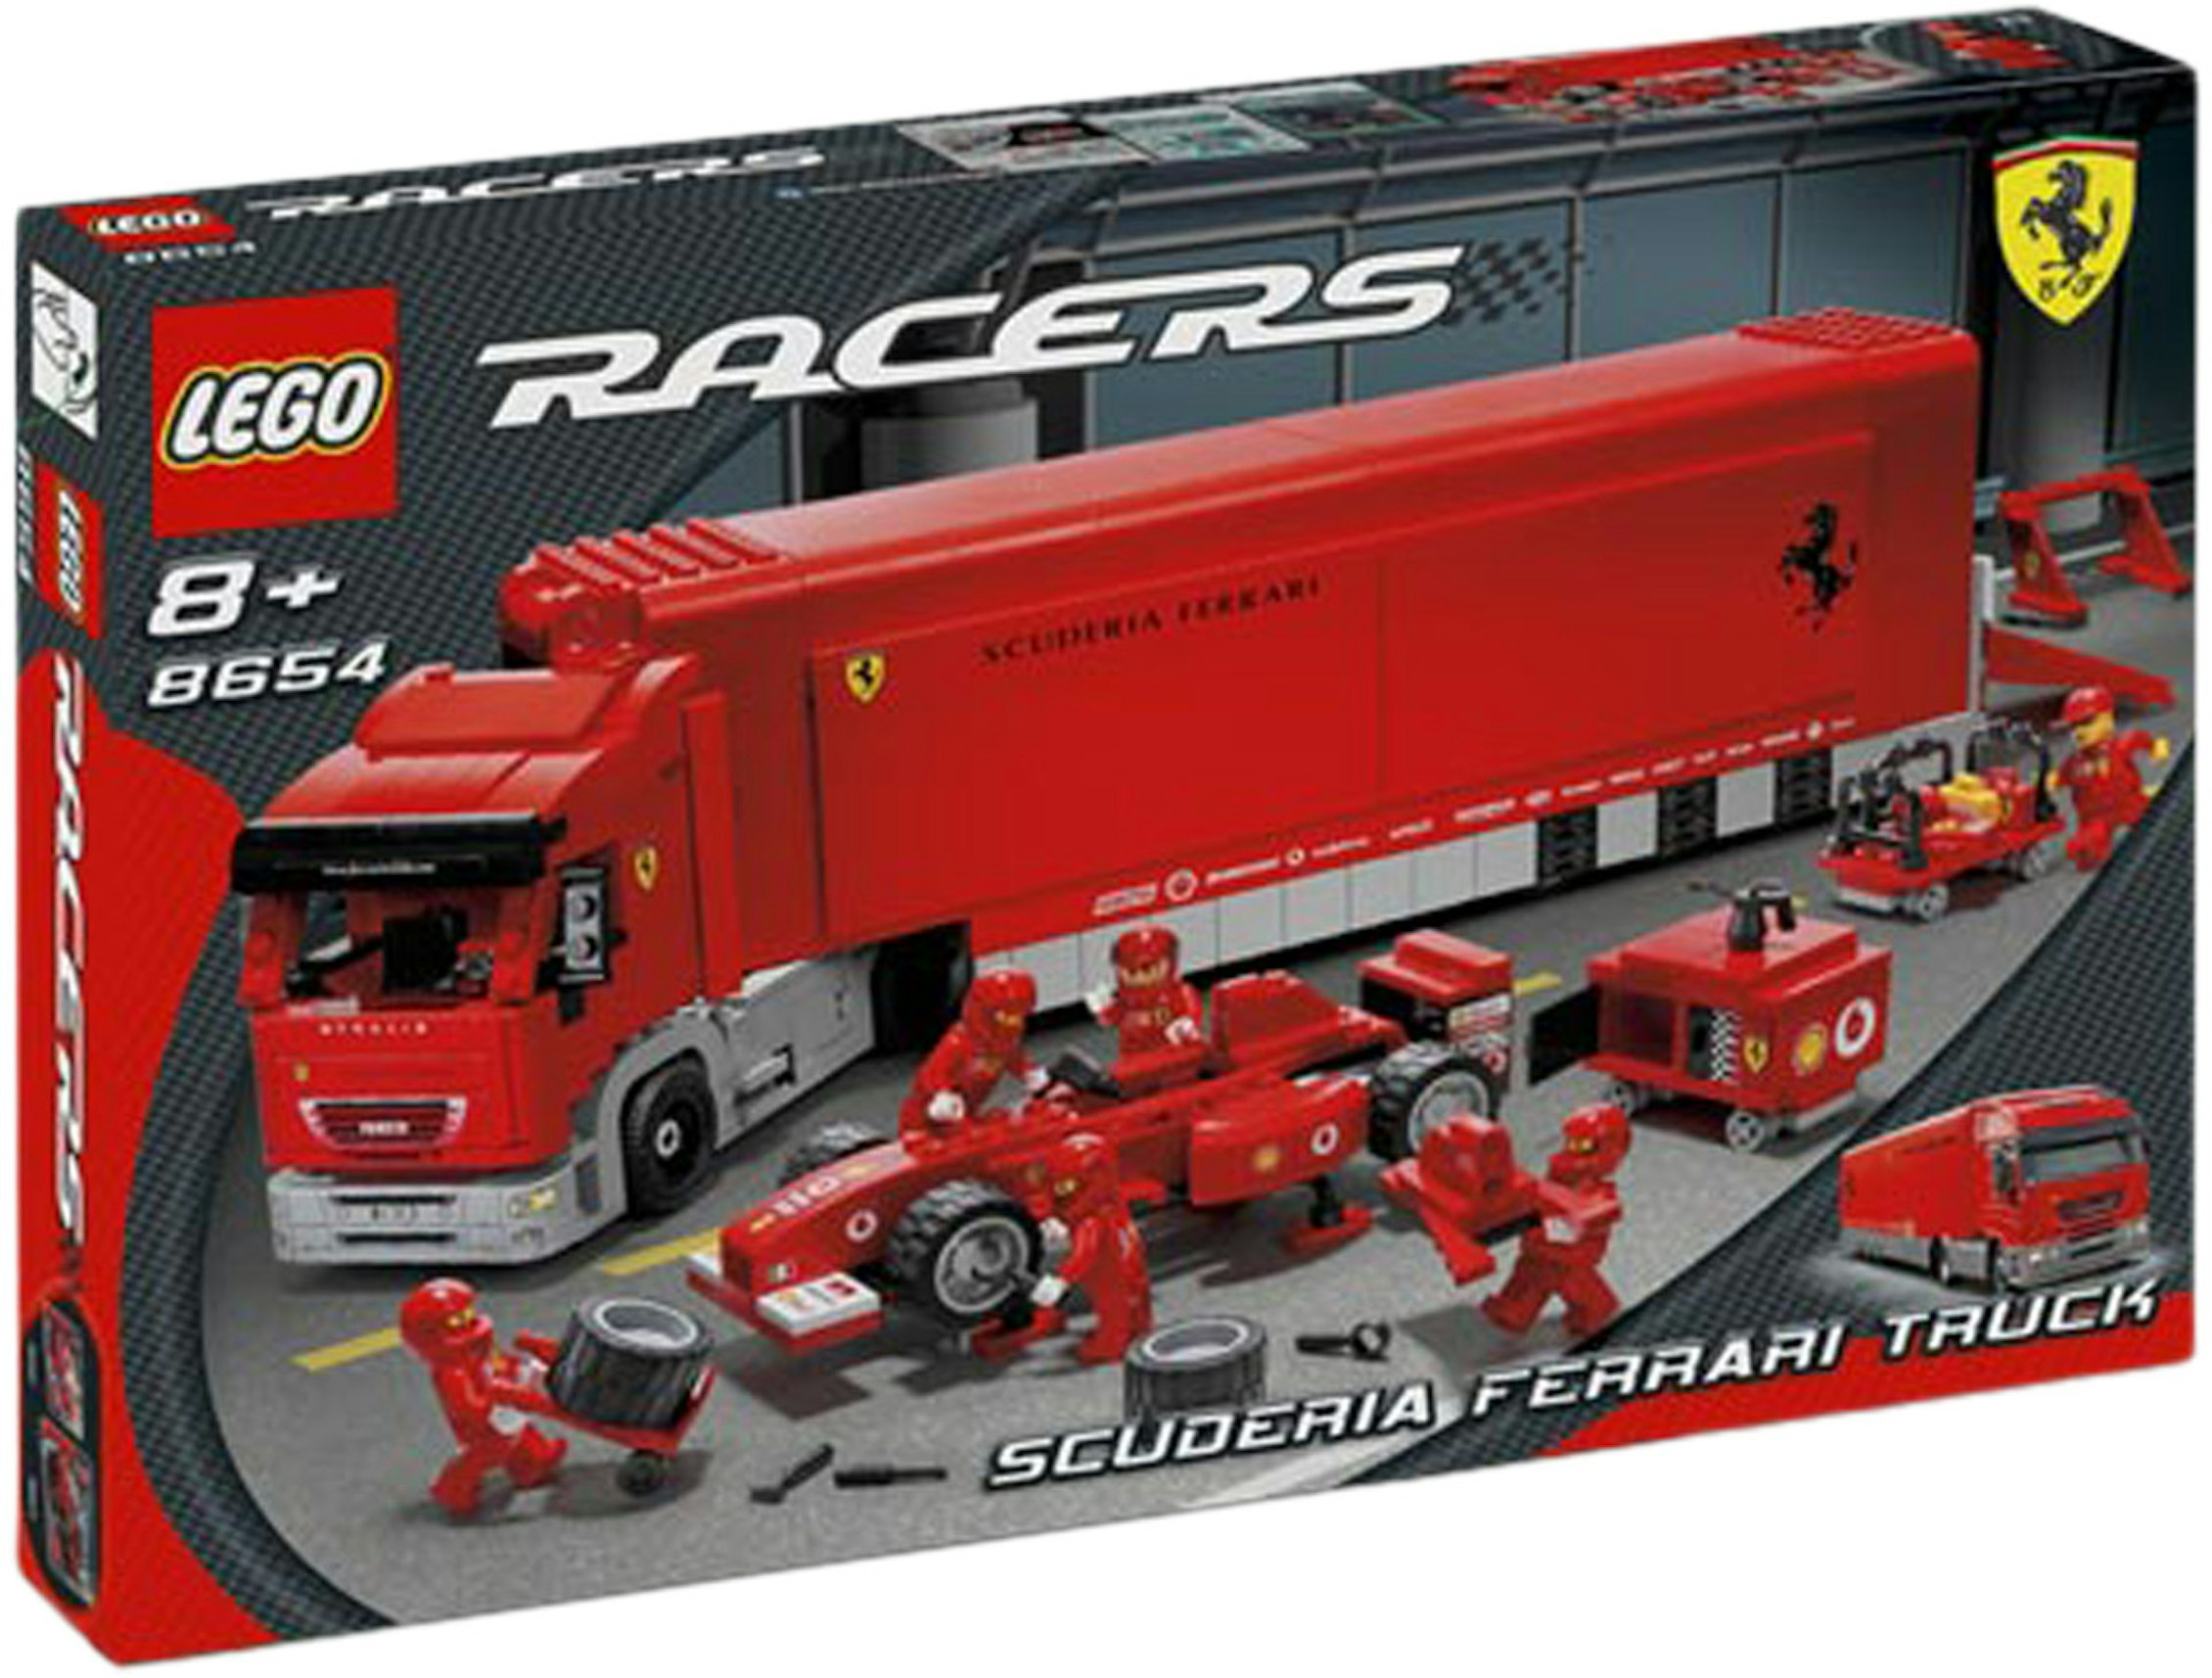 Racers Scuderia Set 8654 - US